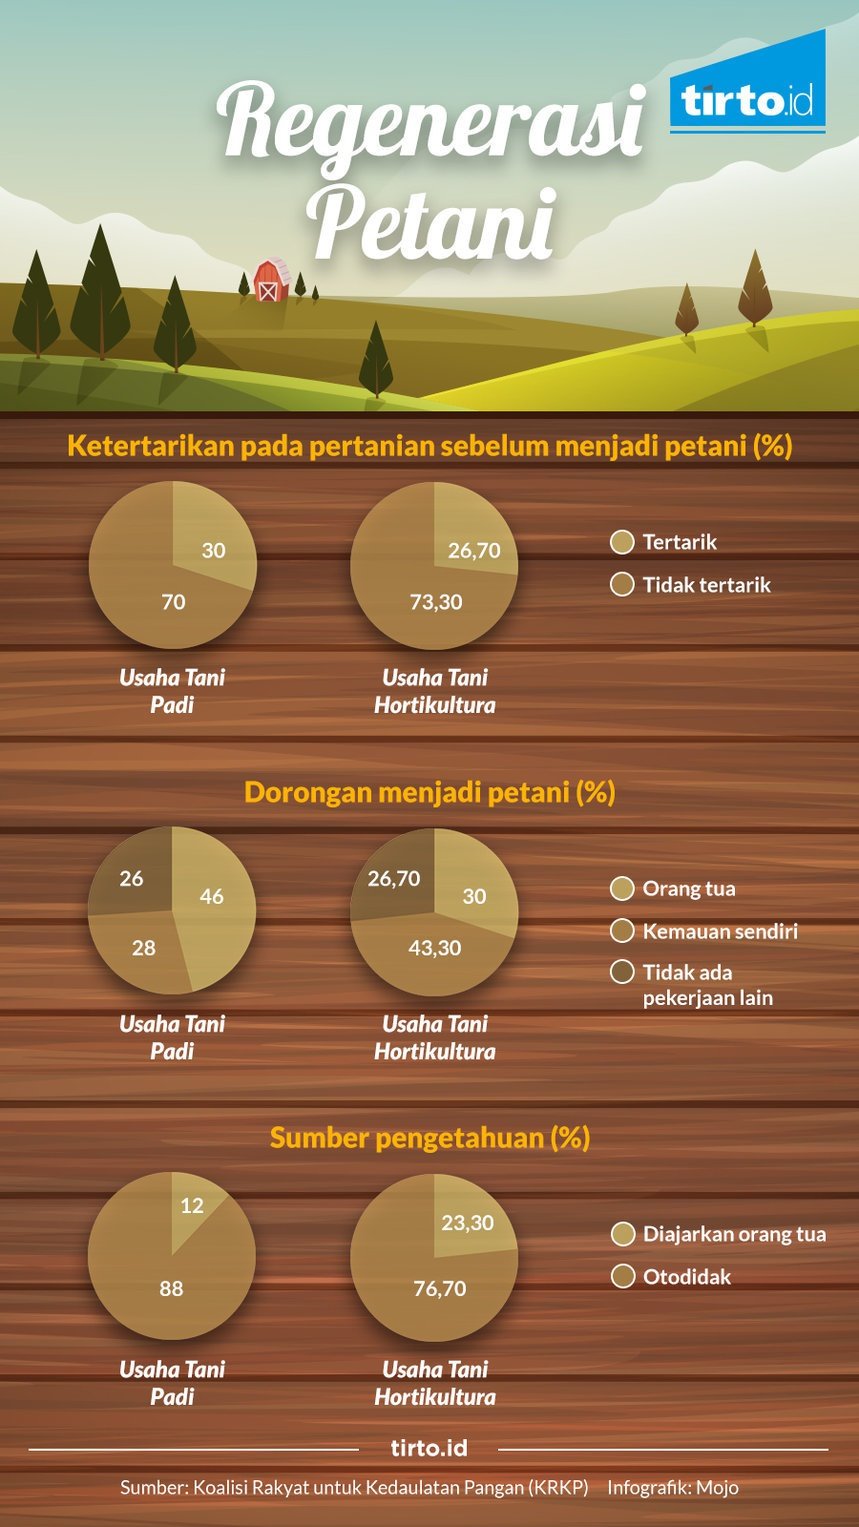 Regenerasi Petani - Infografik Tirto.ID - Tirto.ID